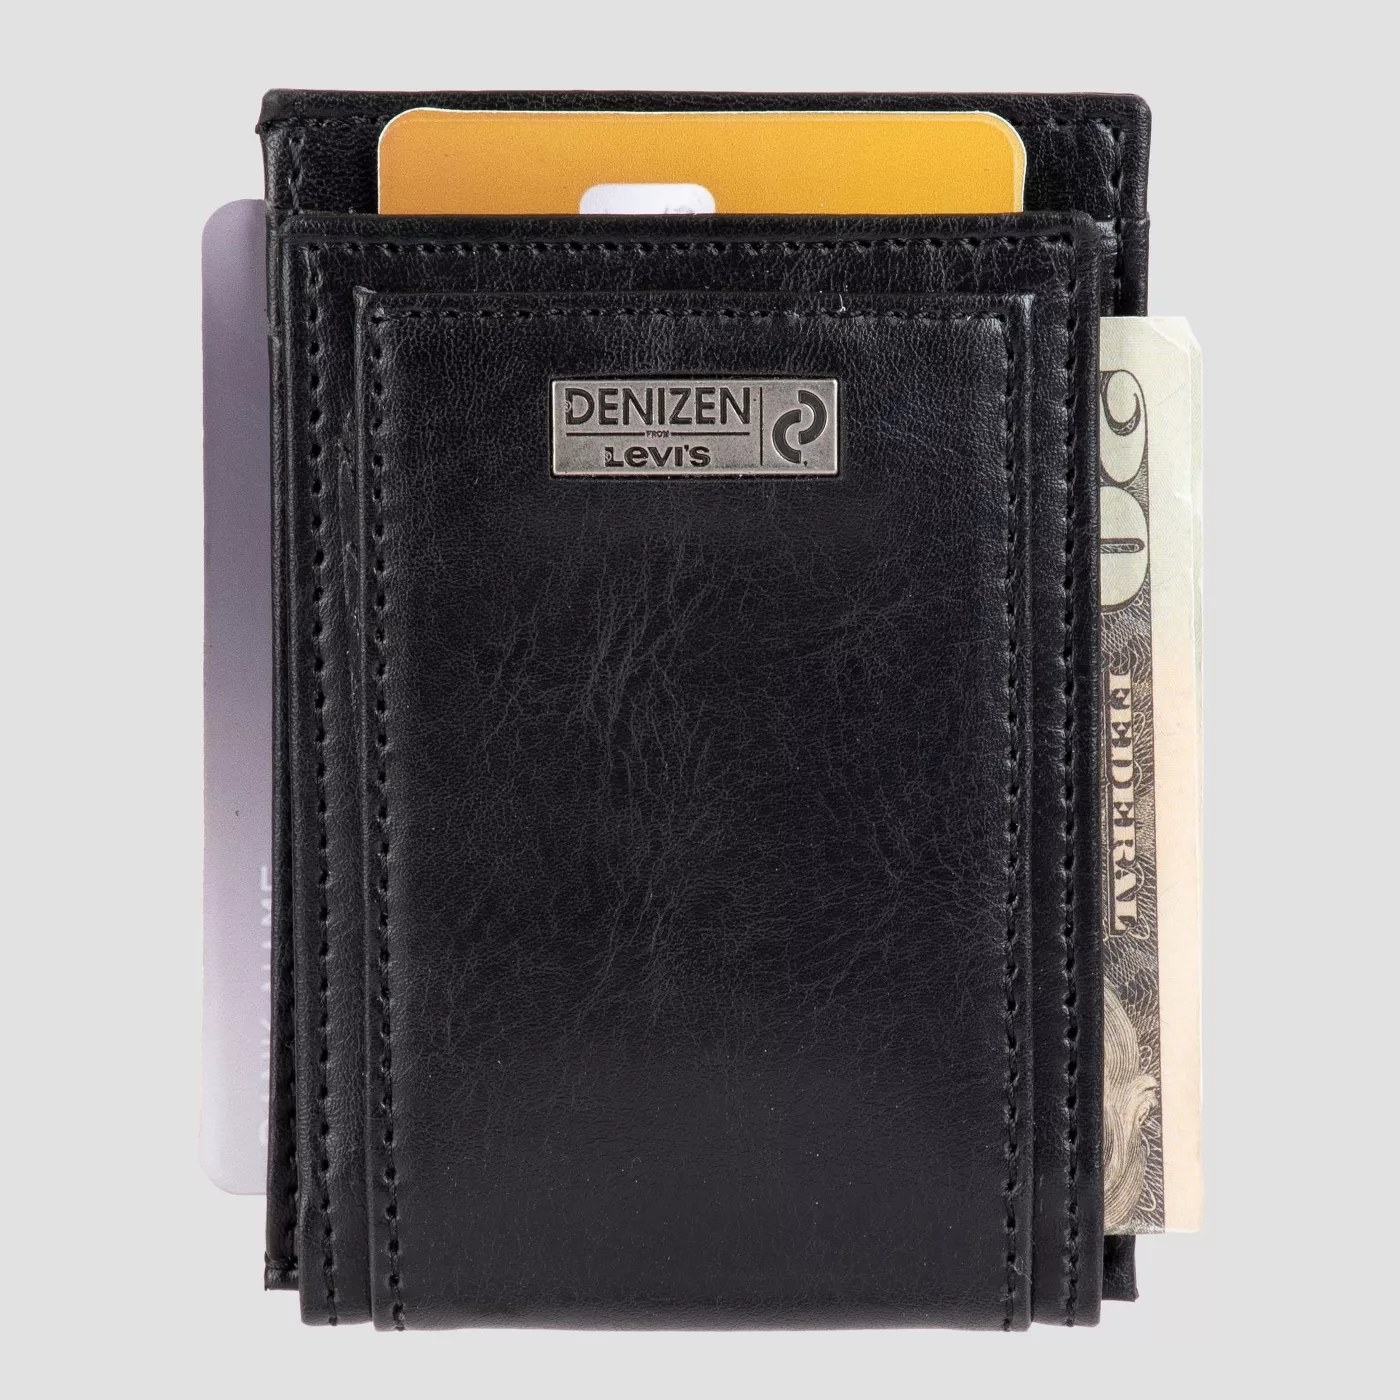 The black Denizen Levi&#x27;s wallet